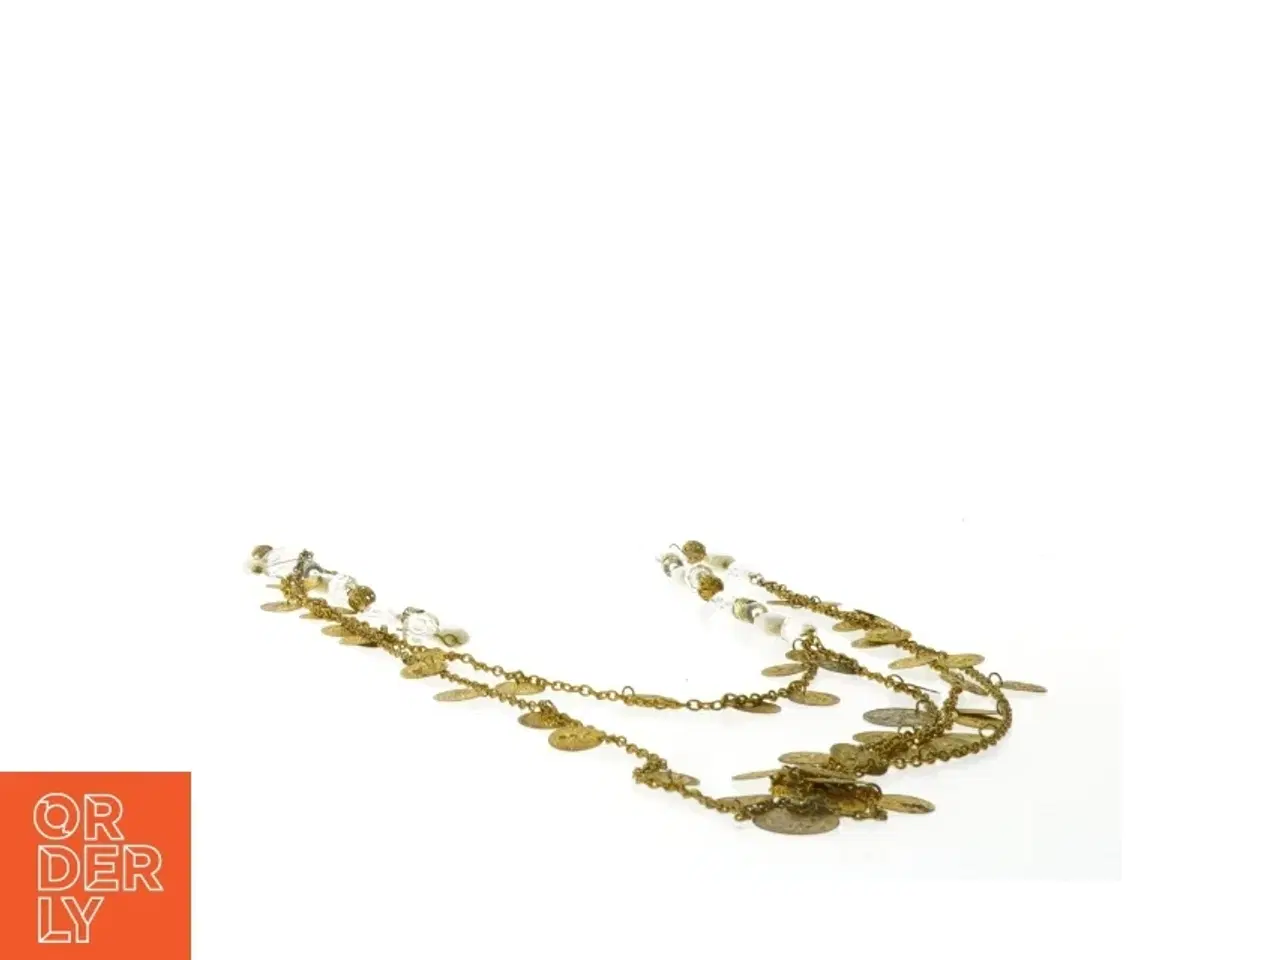 Billede 3 - Perlekæde med guld detaljer (str. 83 cm)